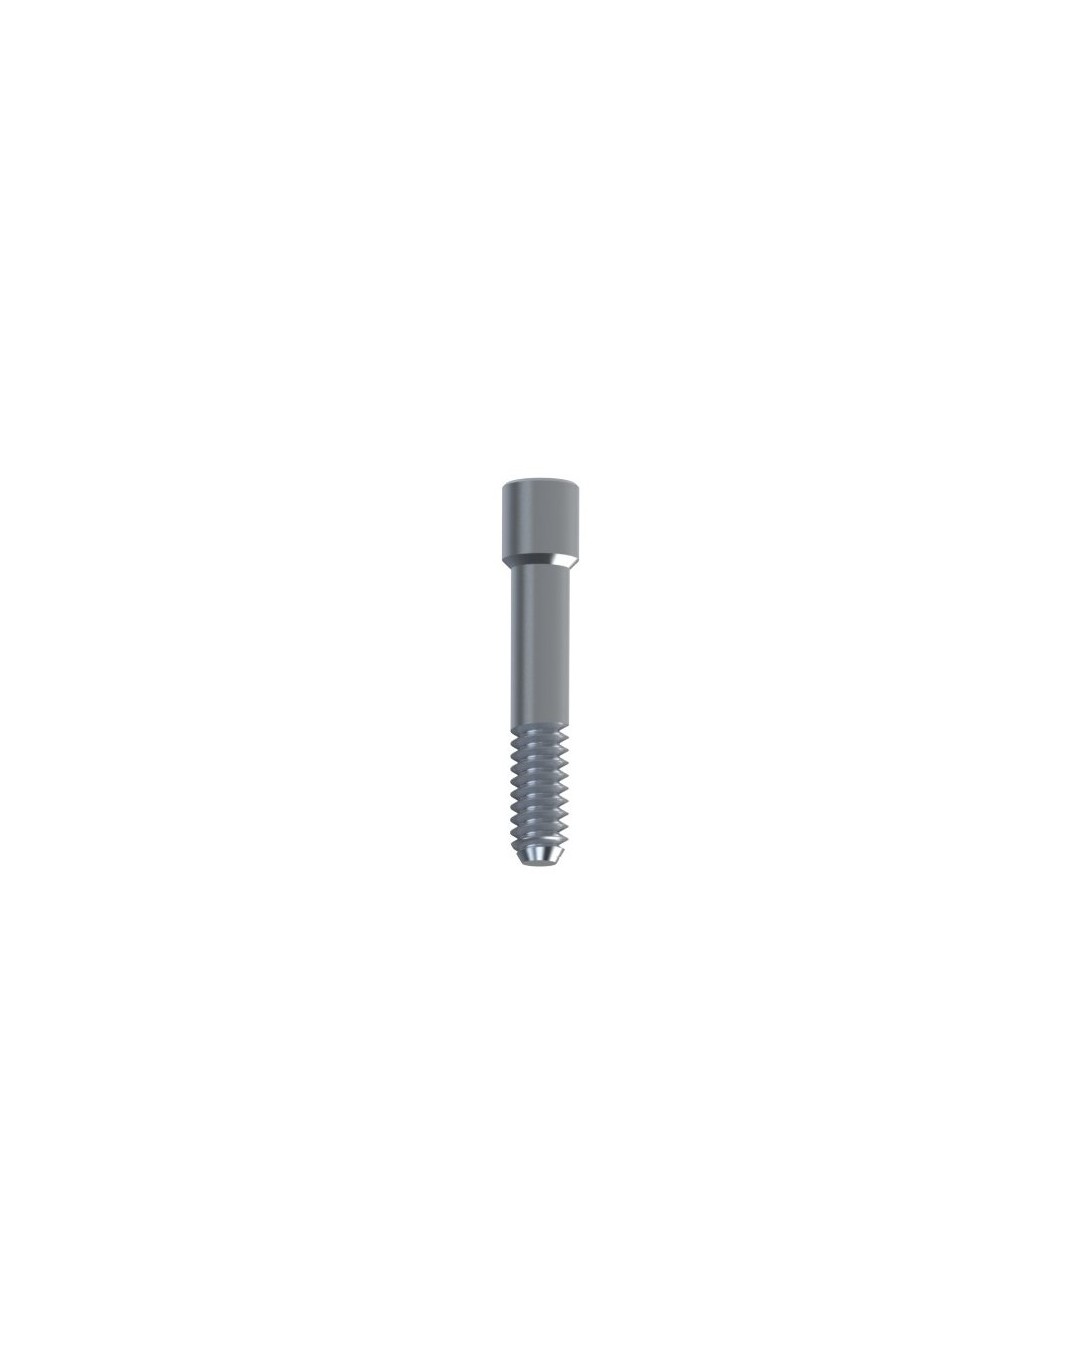 Titanium Screw compatible with Camlog® Camlog®